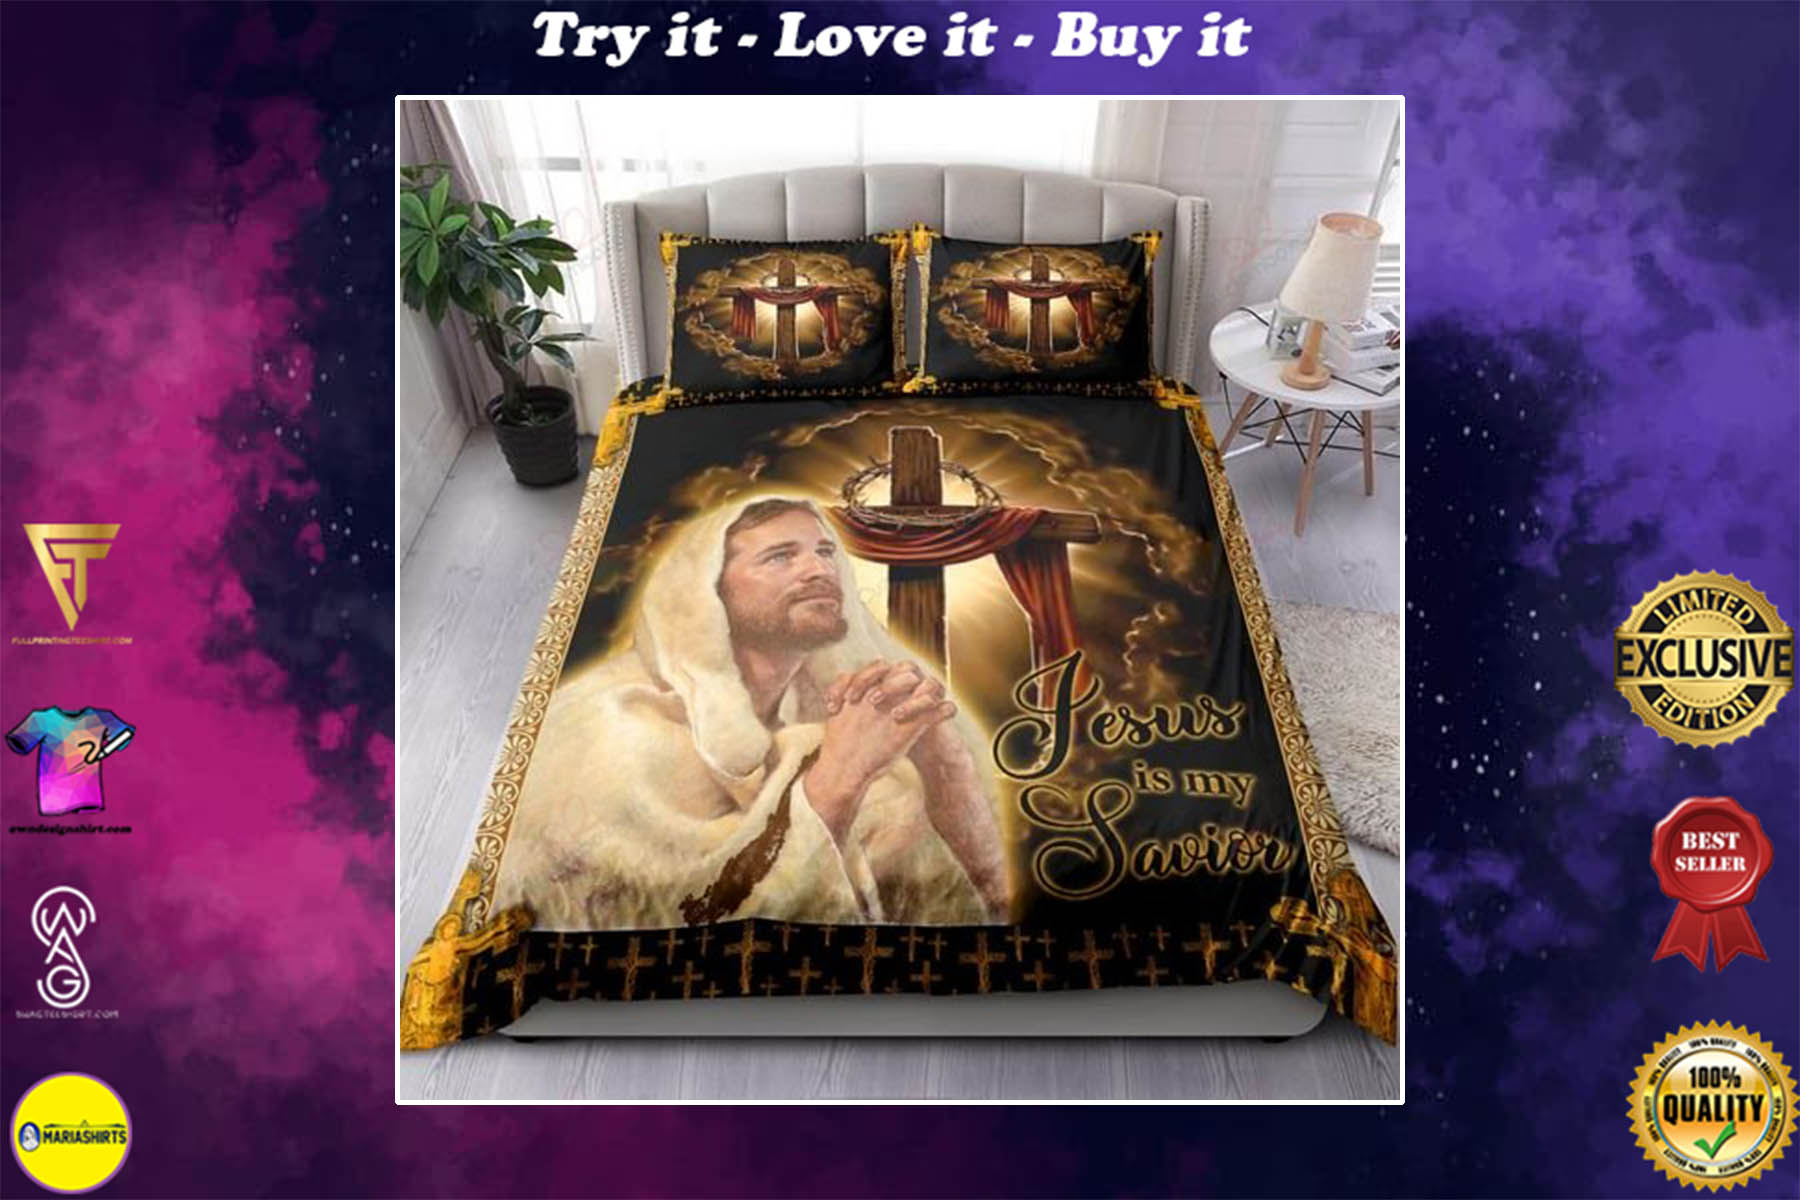 Jesus is my savior bedding set